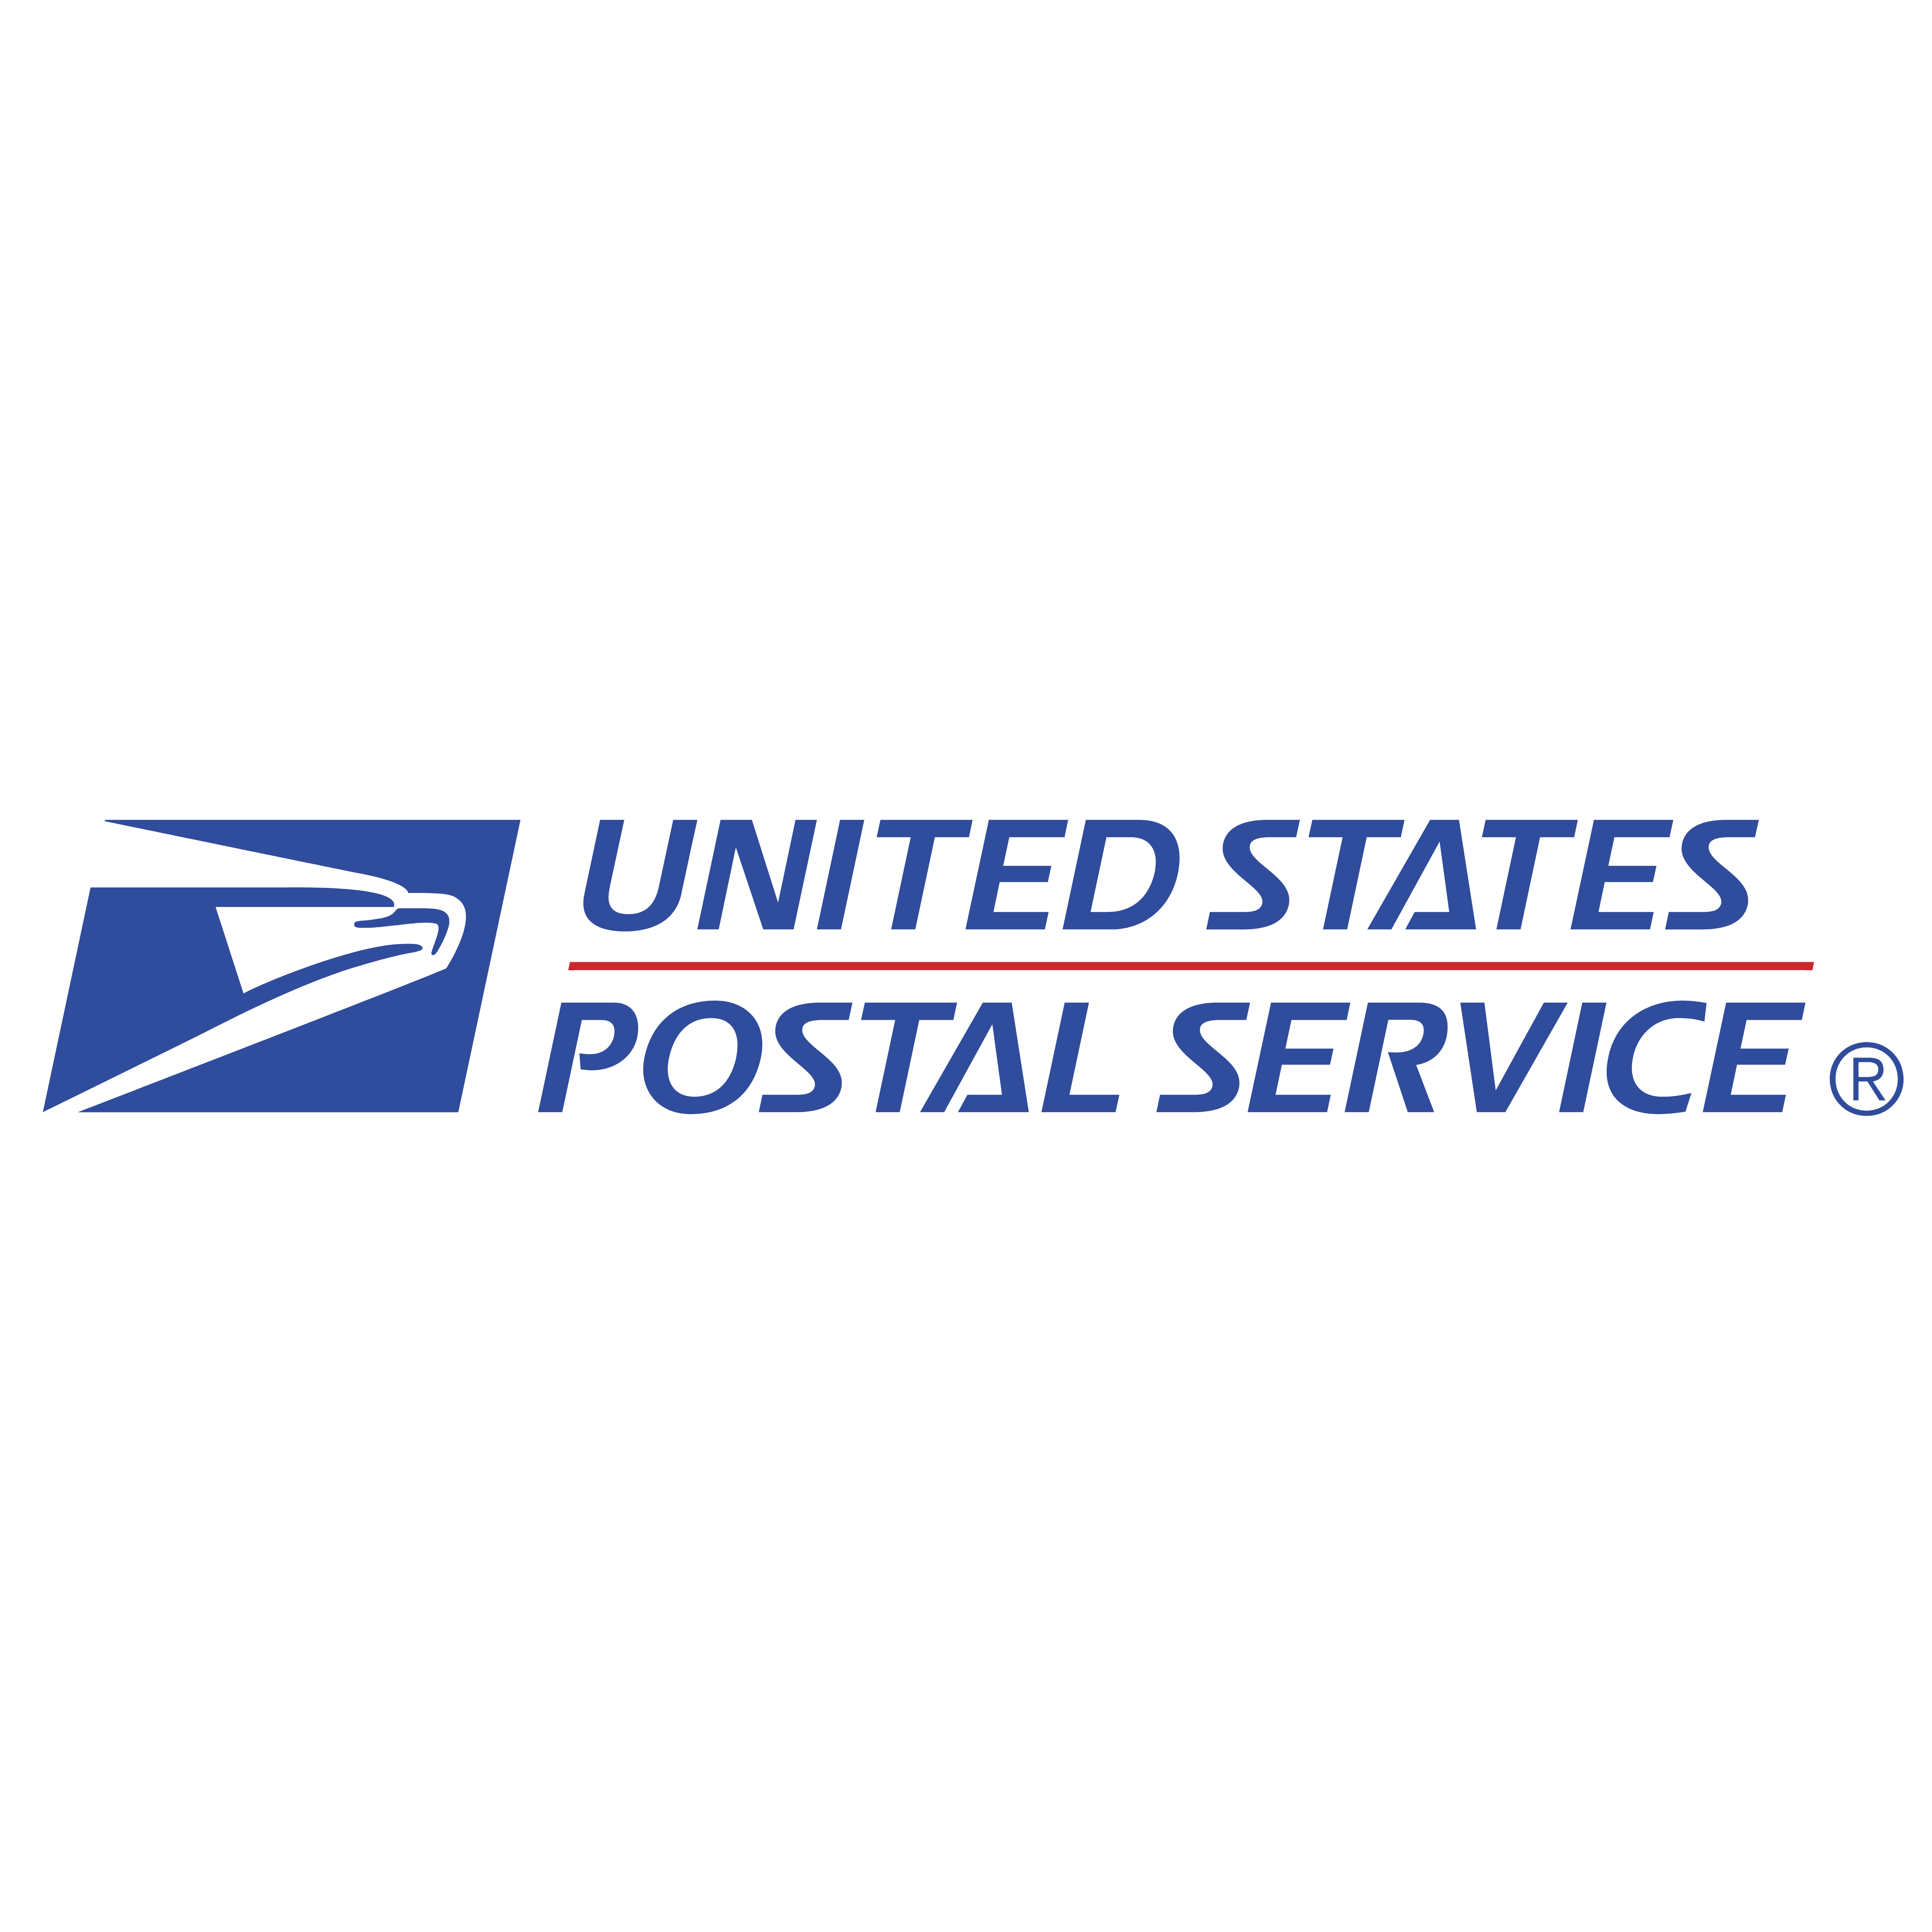 United States Postal Service – Logos Download
